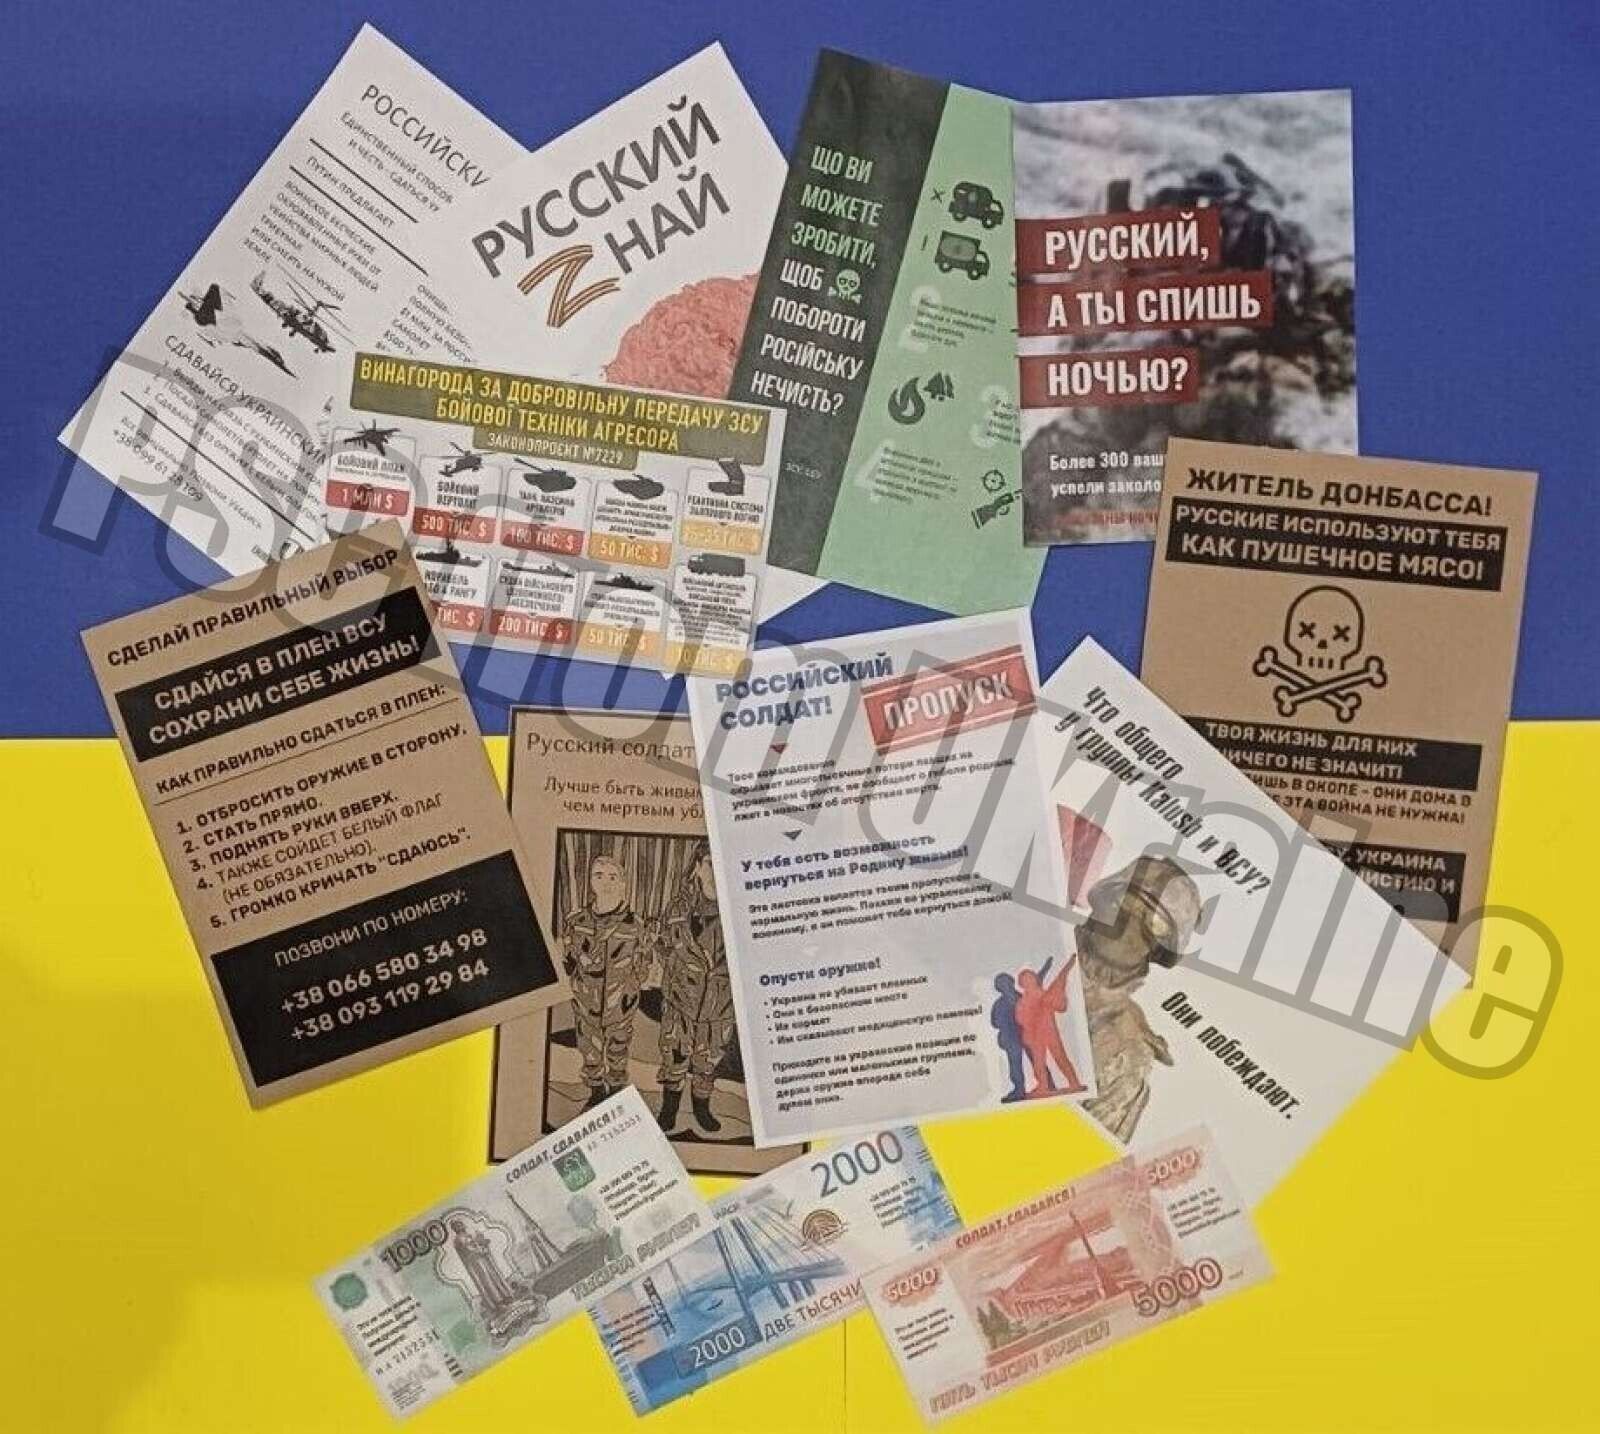 Ukraine propaganda. Anti-russia. Set №1 - 10 propaganda leaflet + 3 banknotes